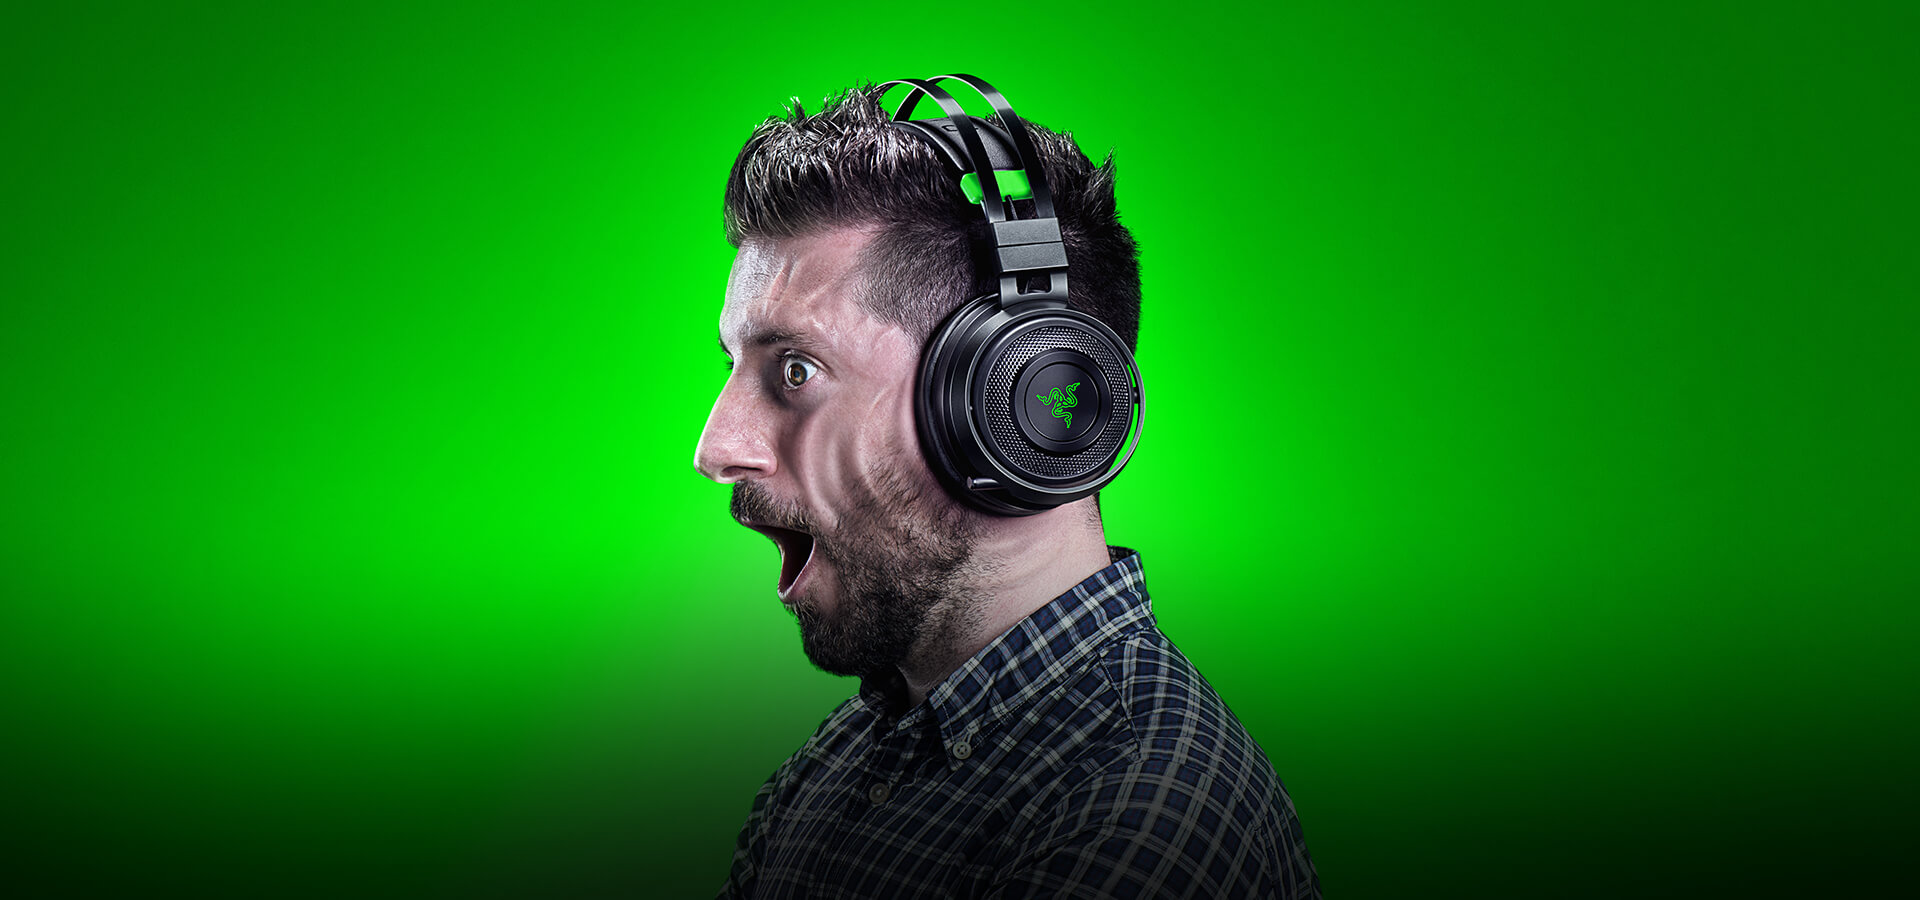 Razer Nari Ultimate for Xbox One - Купить гарнитуру для консоли и 